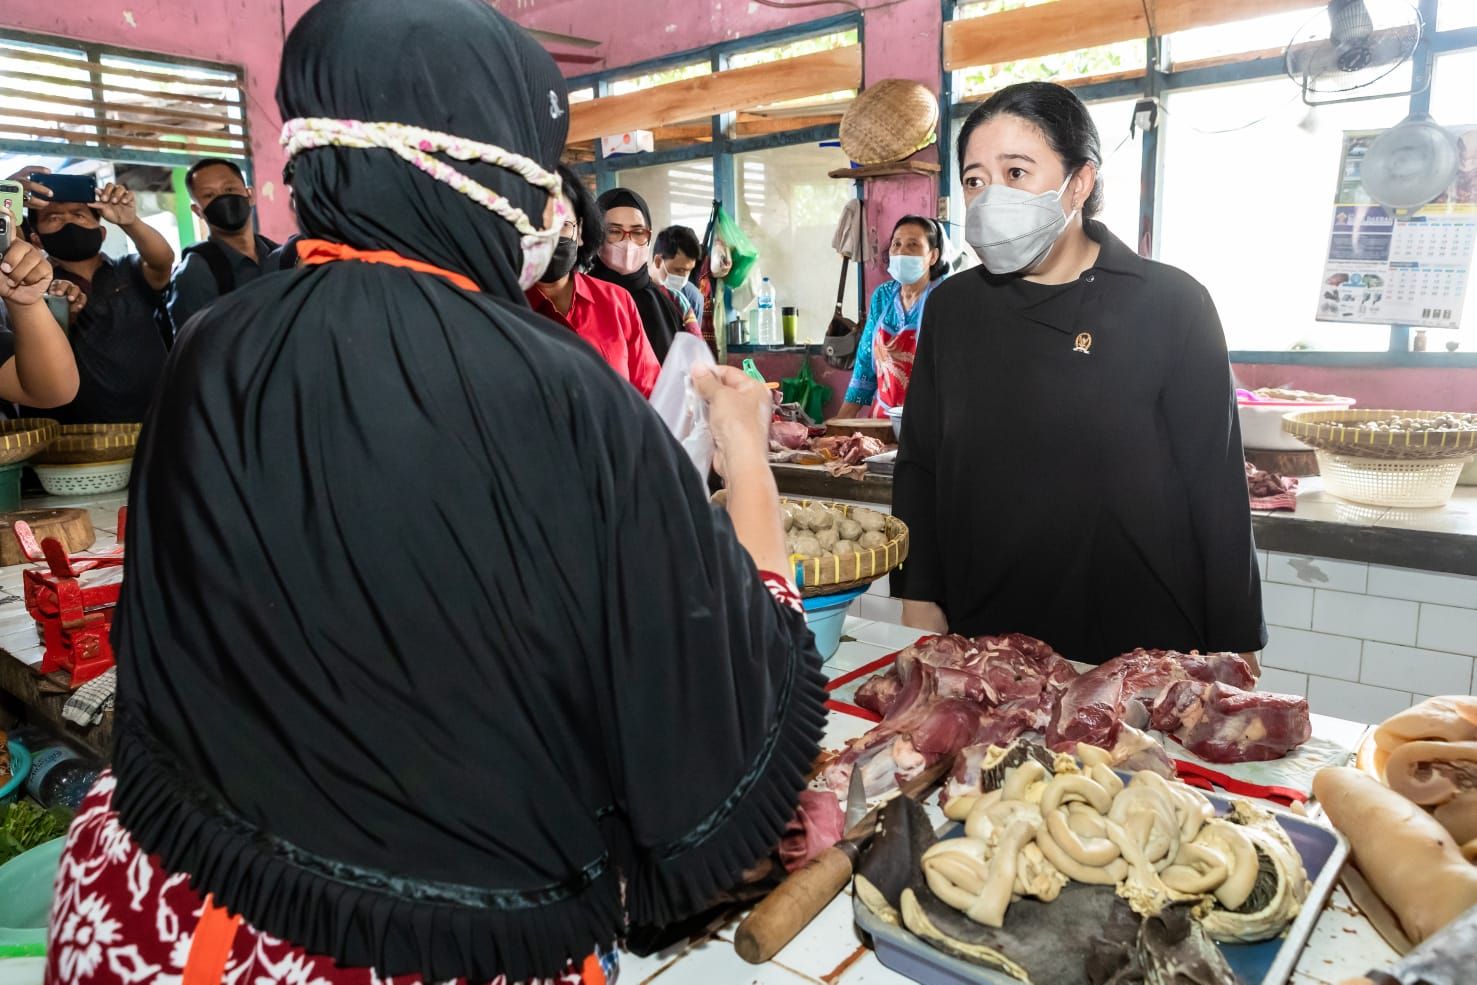 Tinjau kondisi pasar dan harga bahan pokok jelang Hari Raya Idul Fitri, Ketua DPR RI Dr.(H.C) Puan Maharani kunjungi Pasar Jungke, Karanganyar, Jawa Tengah.